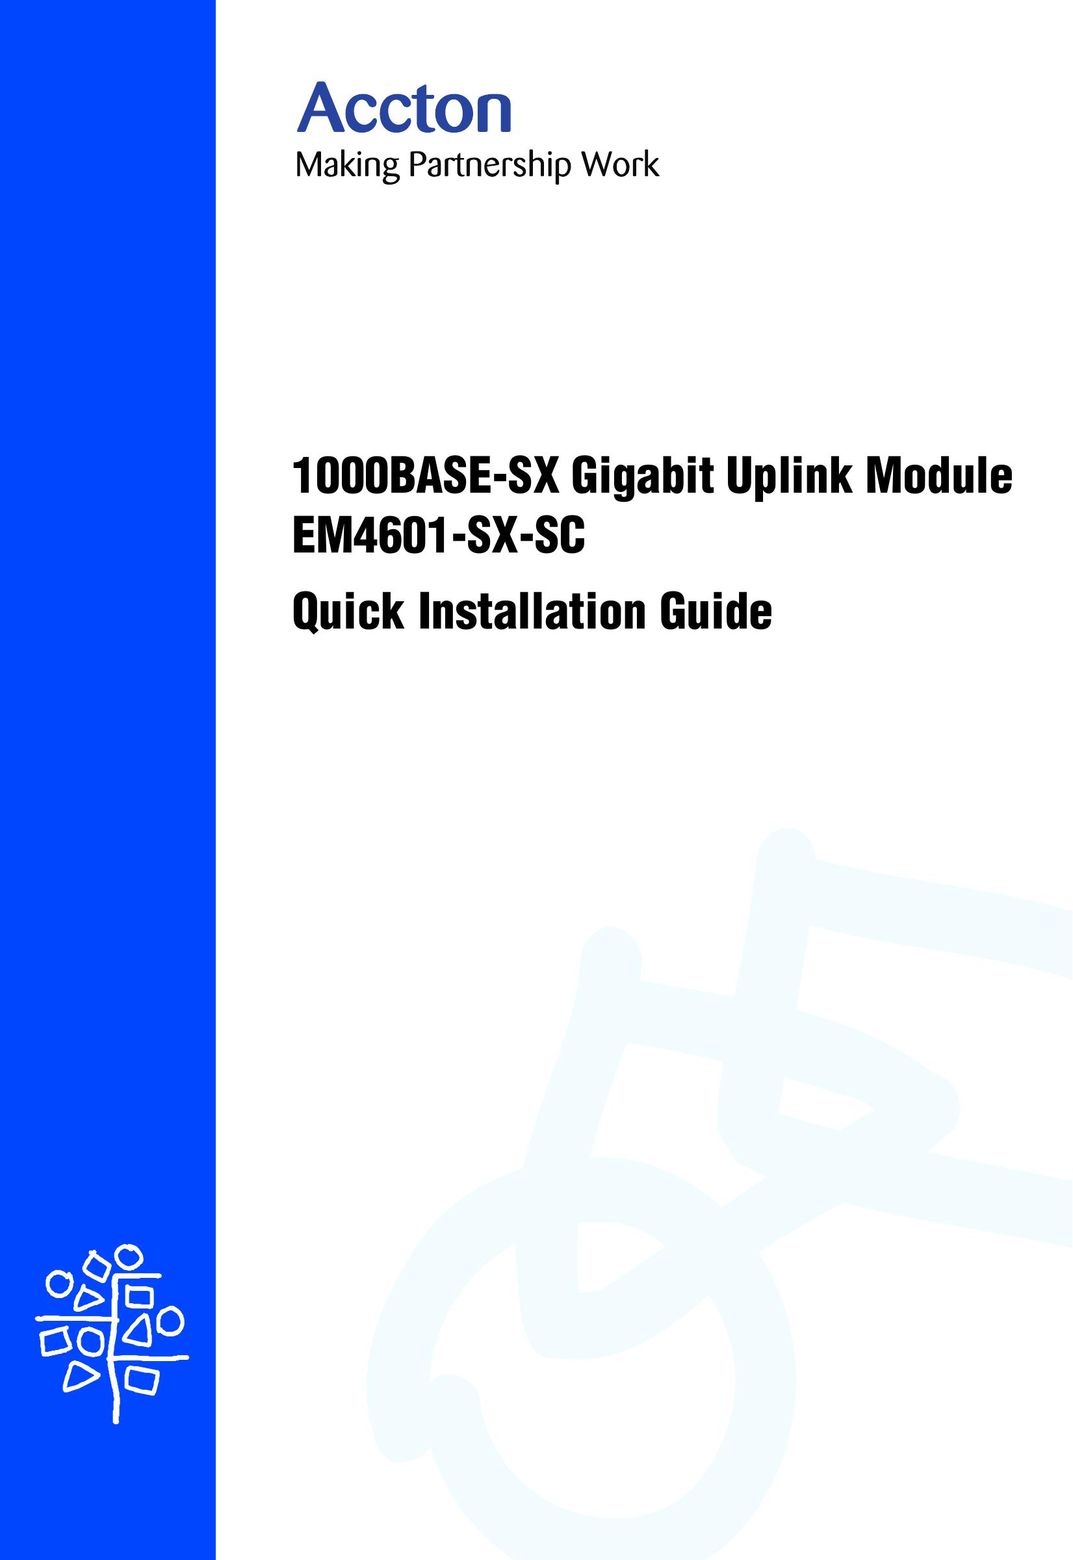 Accton Technology 1000BASE-SX Gigabit Uplink Module Network Hardware User Manual